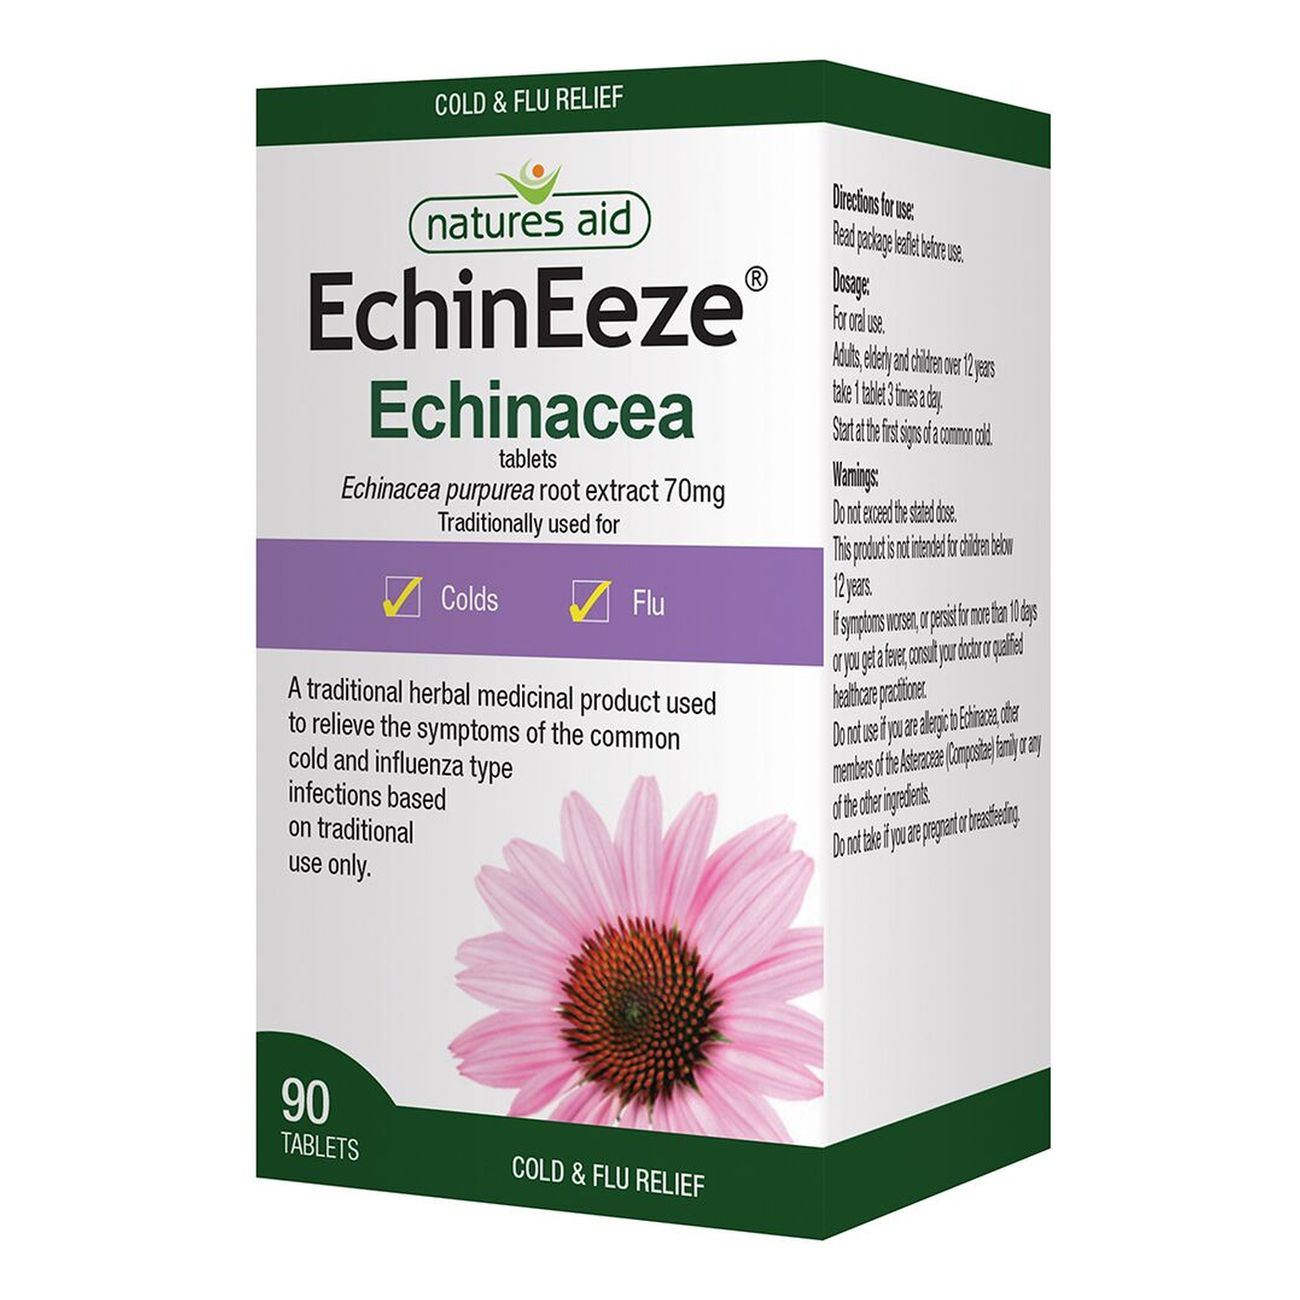 EchinEeze Echinacea 70mg 90 Tablets